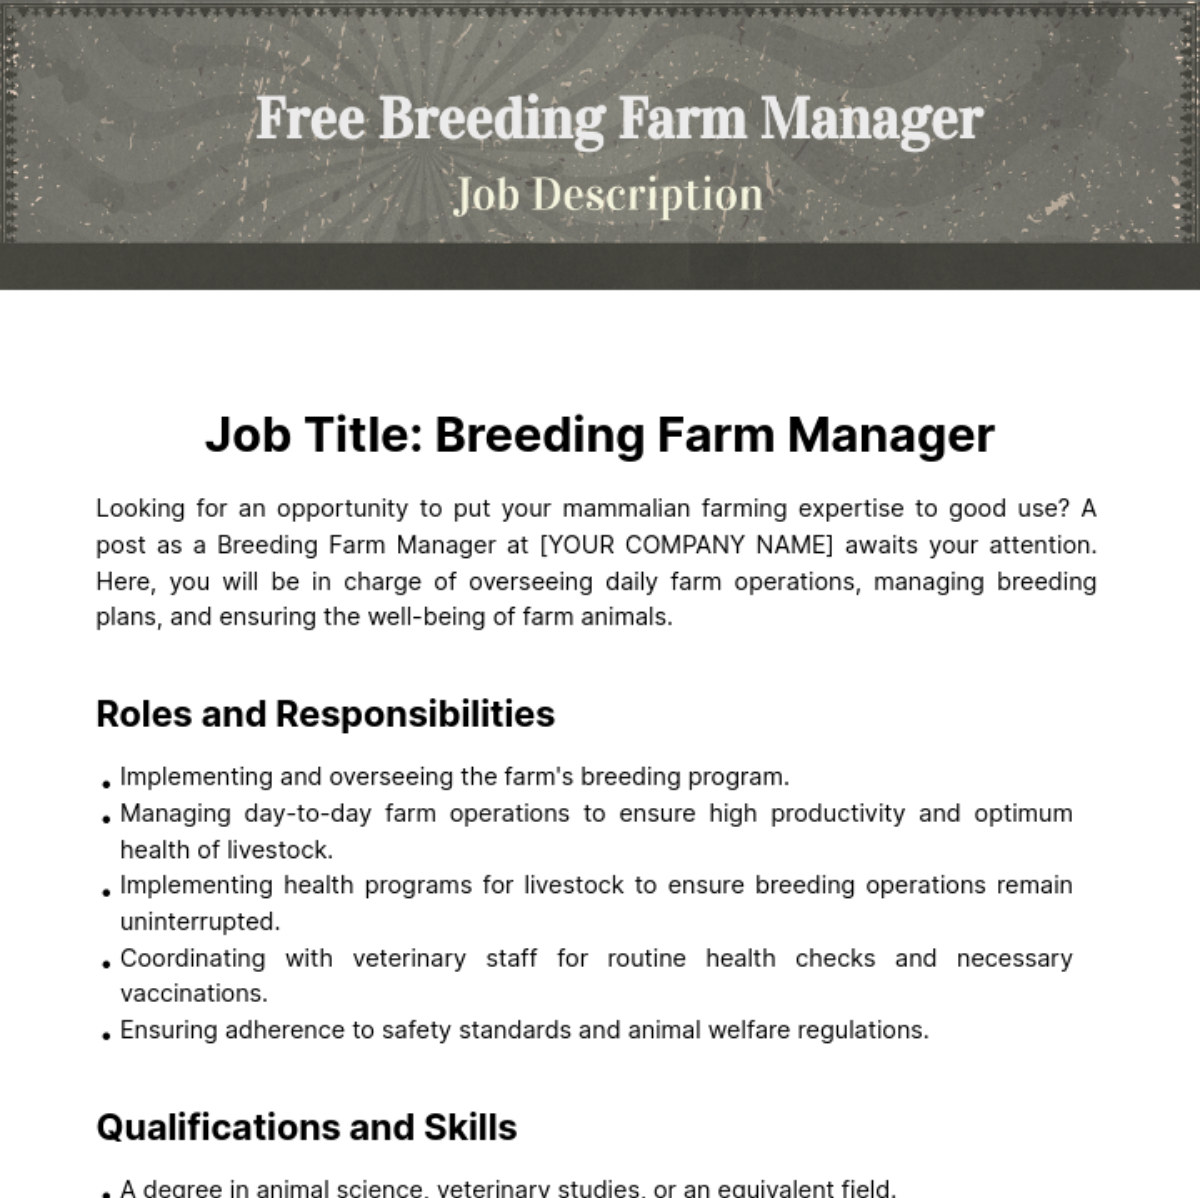 Free Breeding Farm Manager Job Description Template